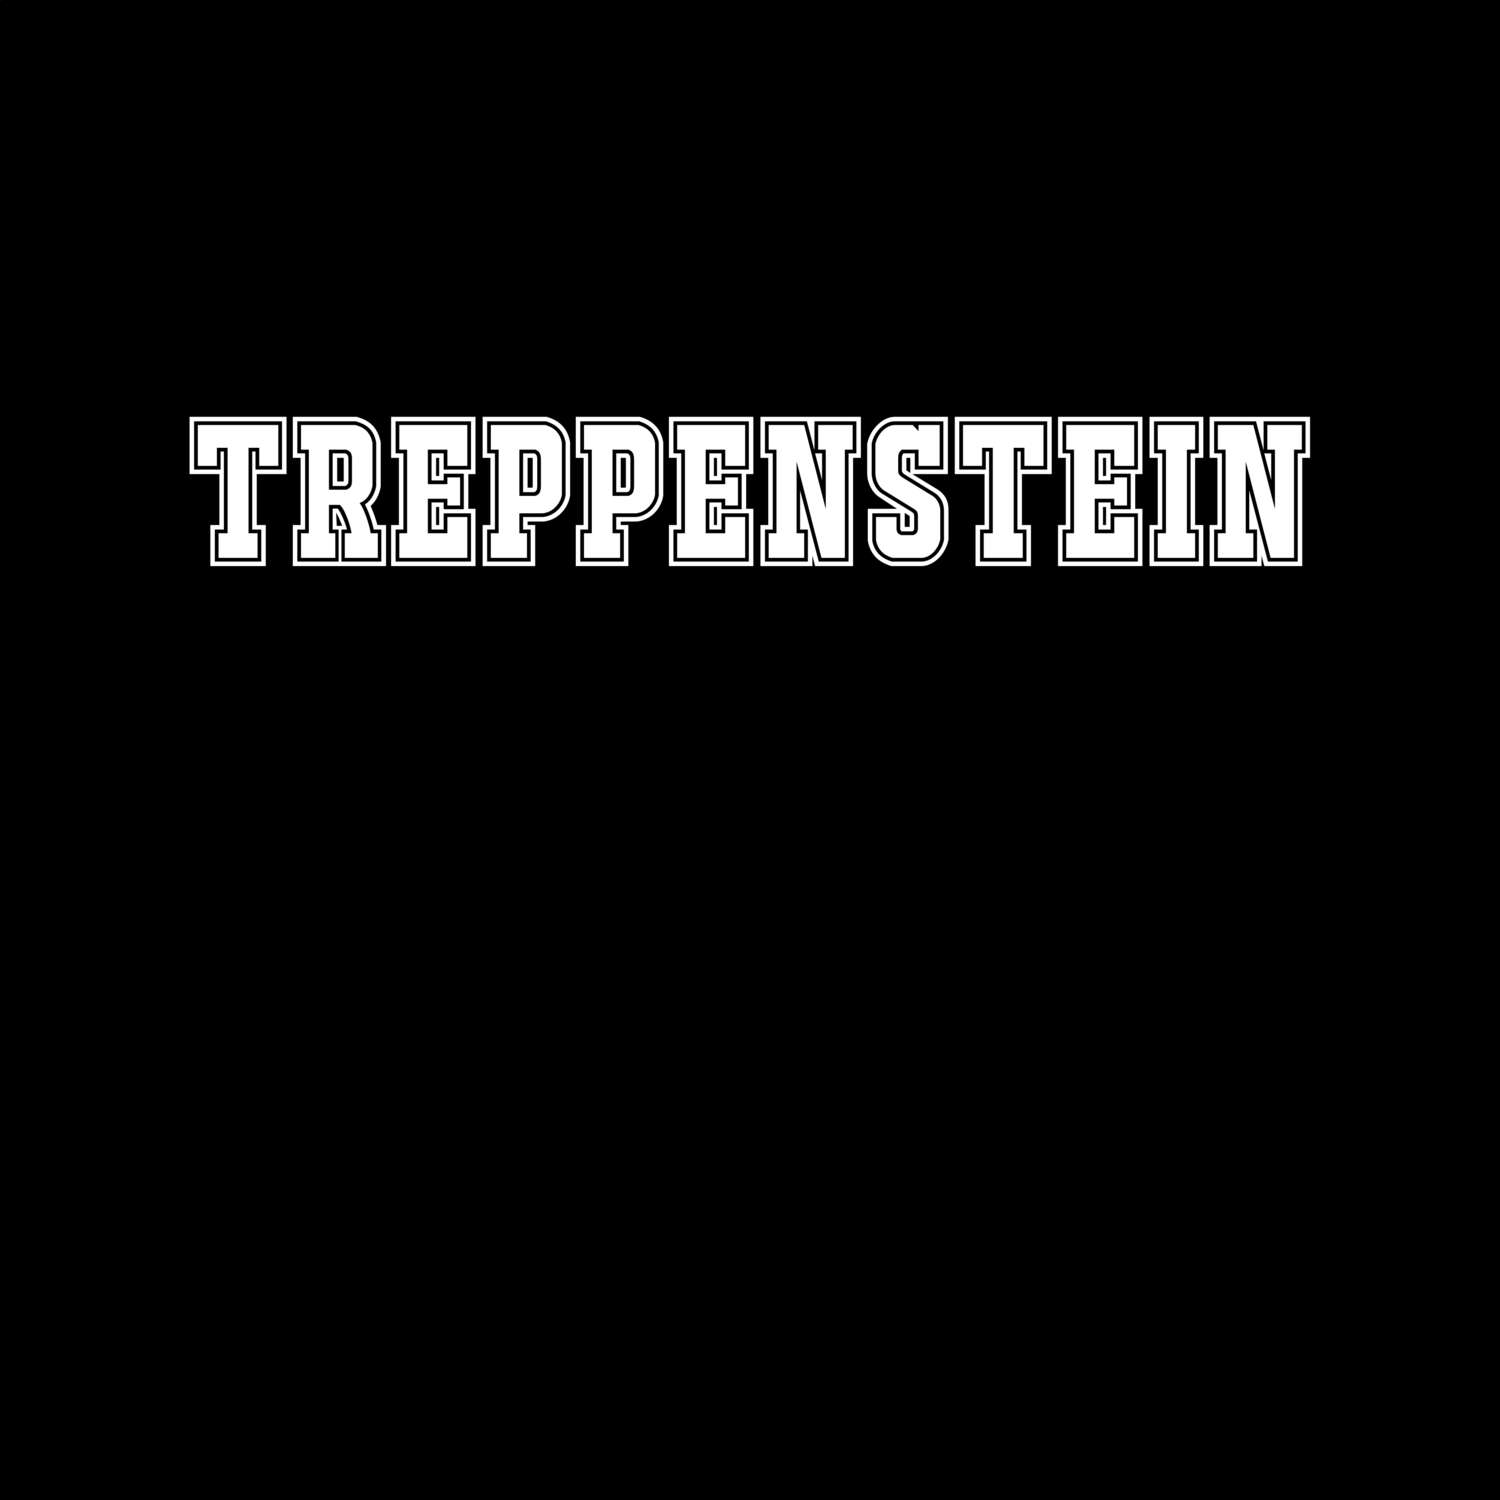 Treppenstein T-Shirt »Classic«